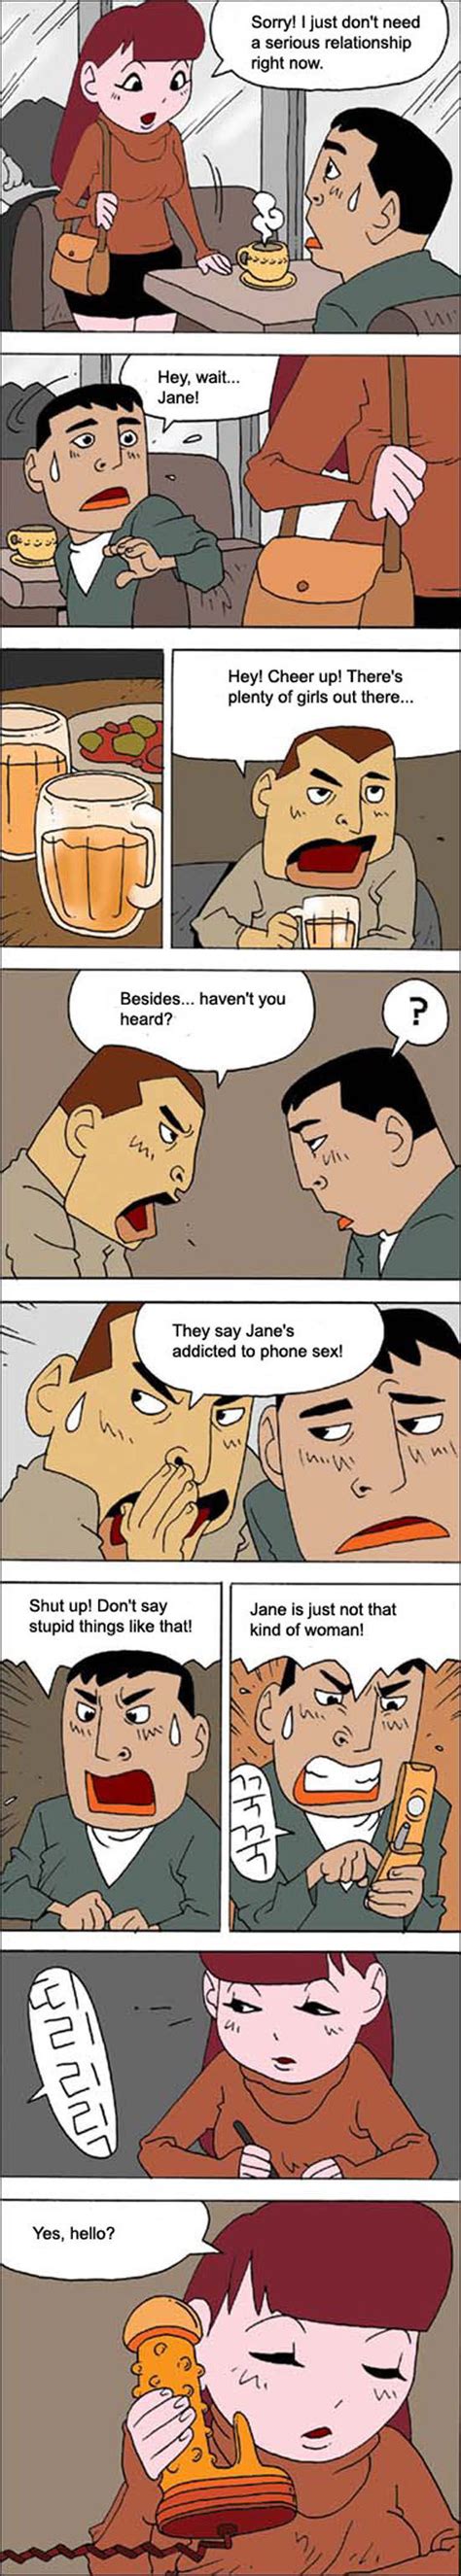 funny korean comic strips part 2 14 pics